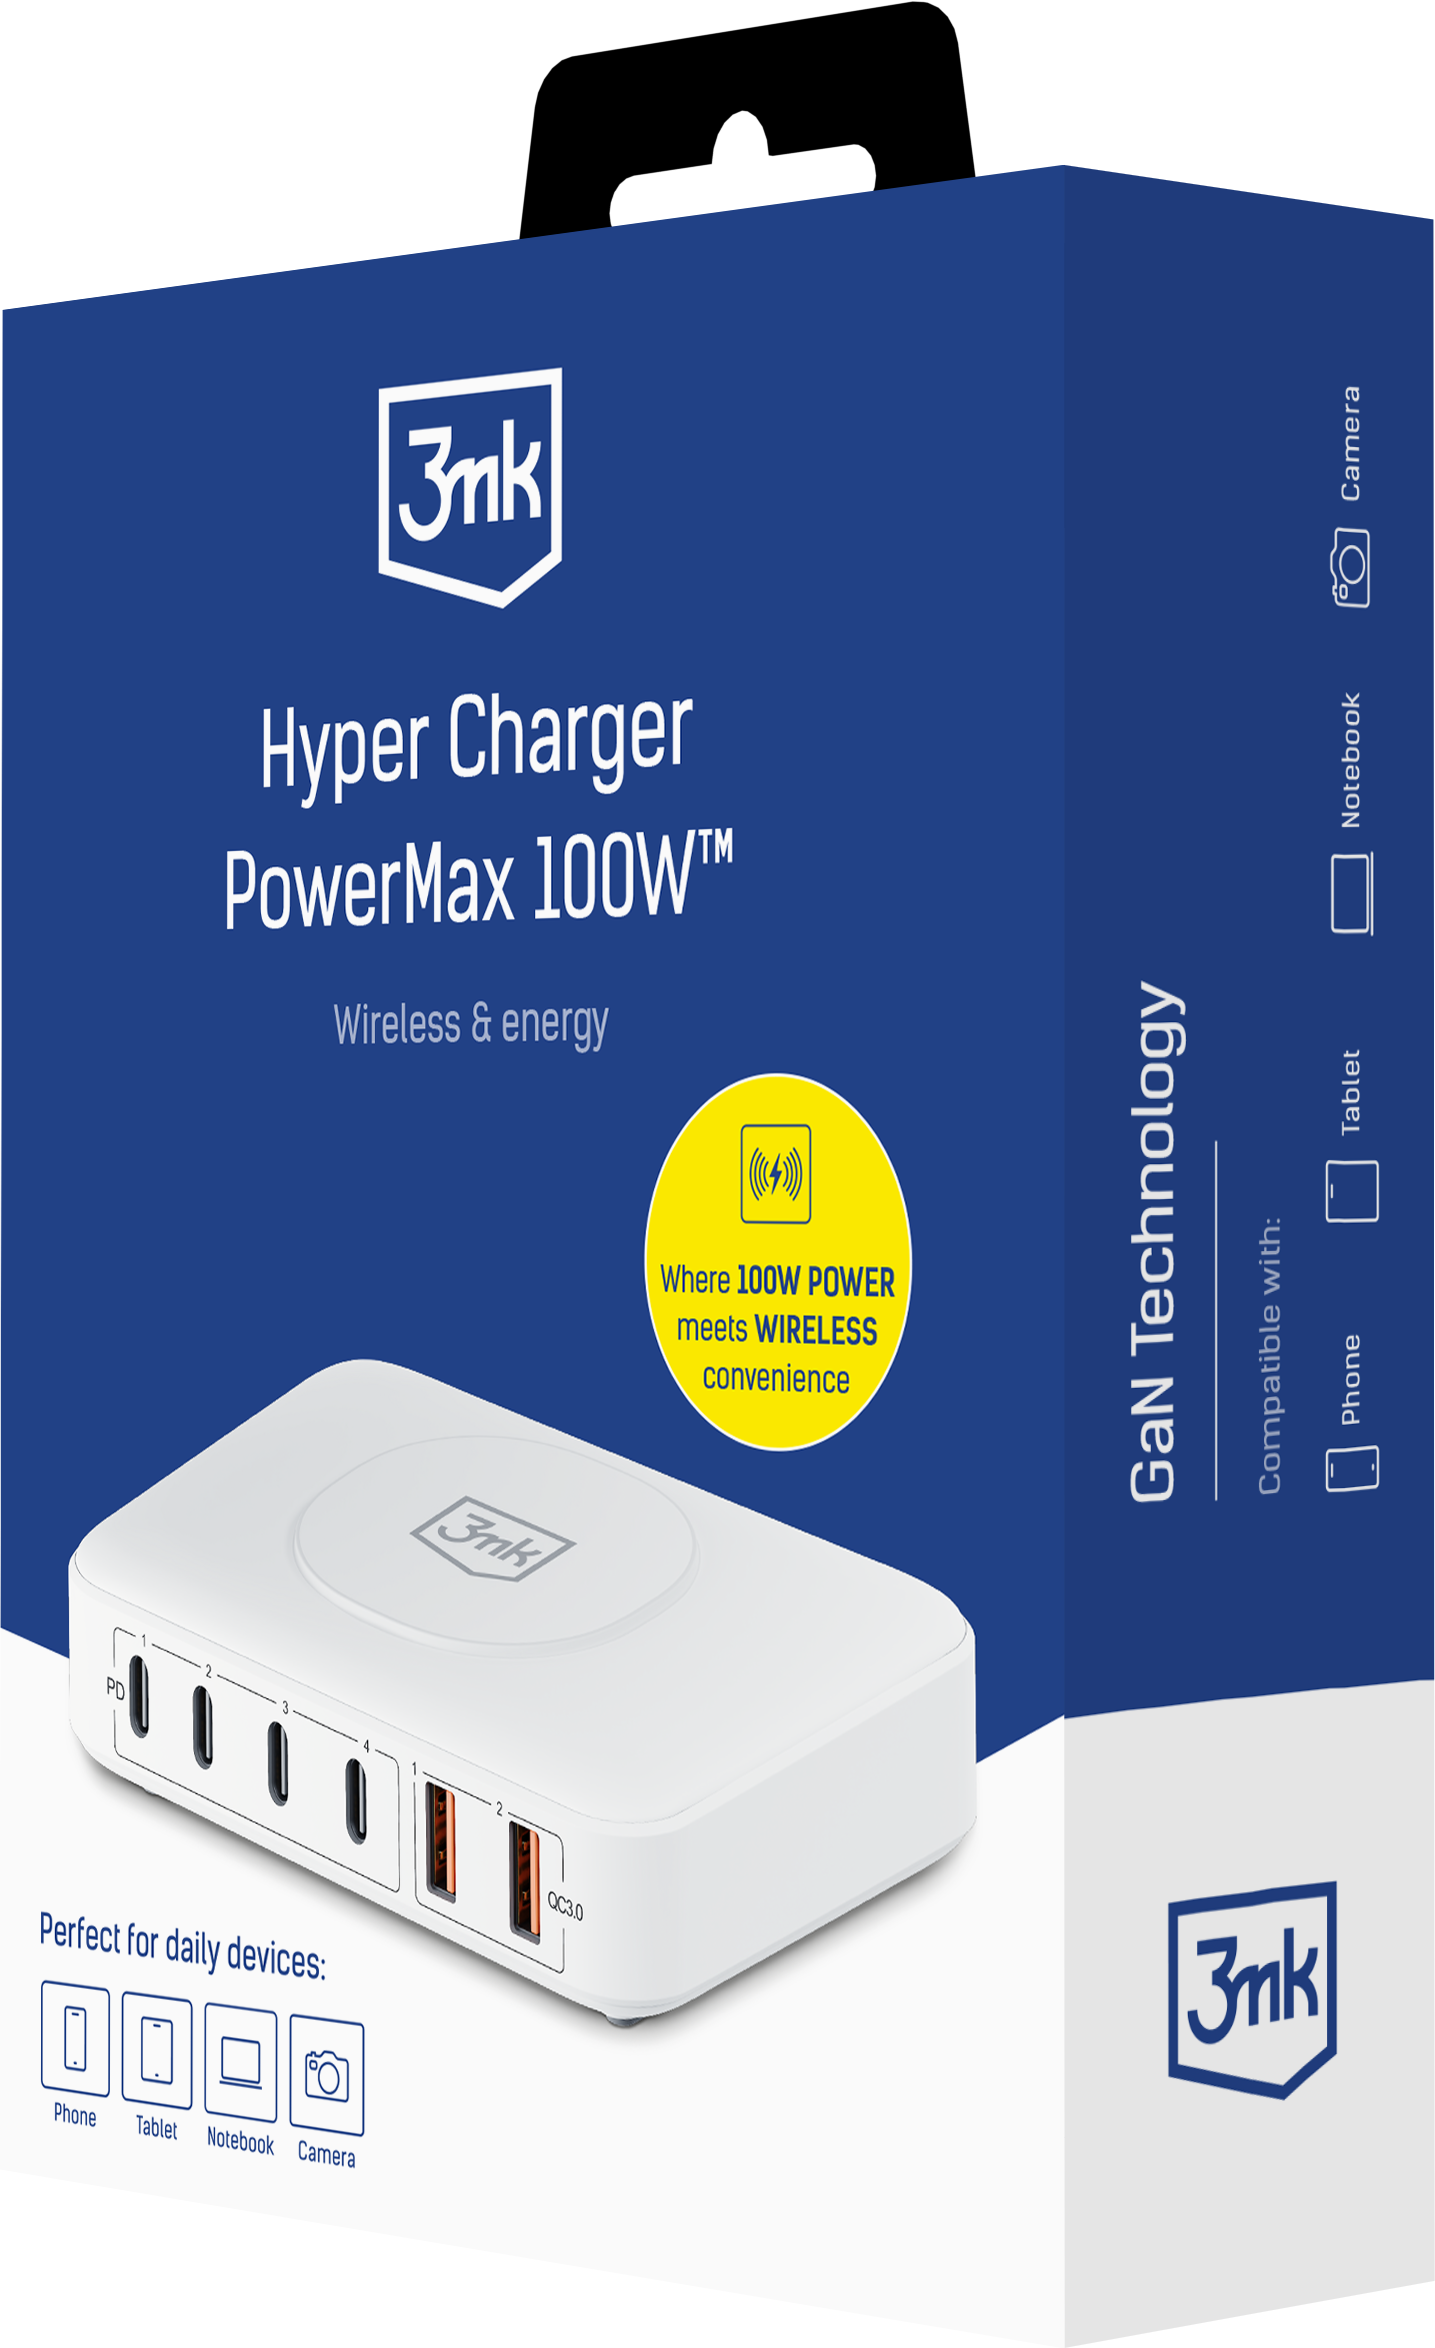 3mk-hyper-charger-powermax-100w_-packshot